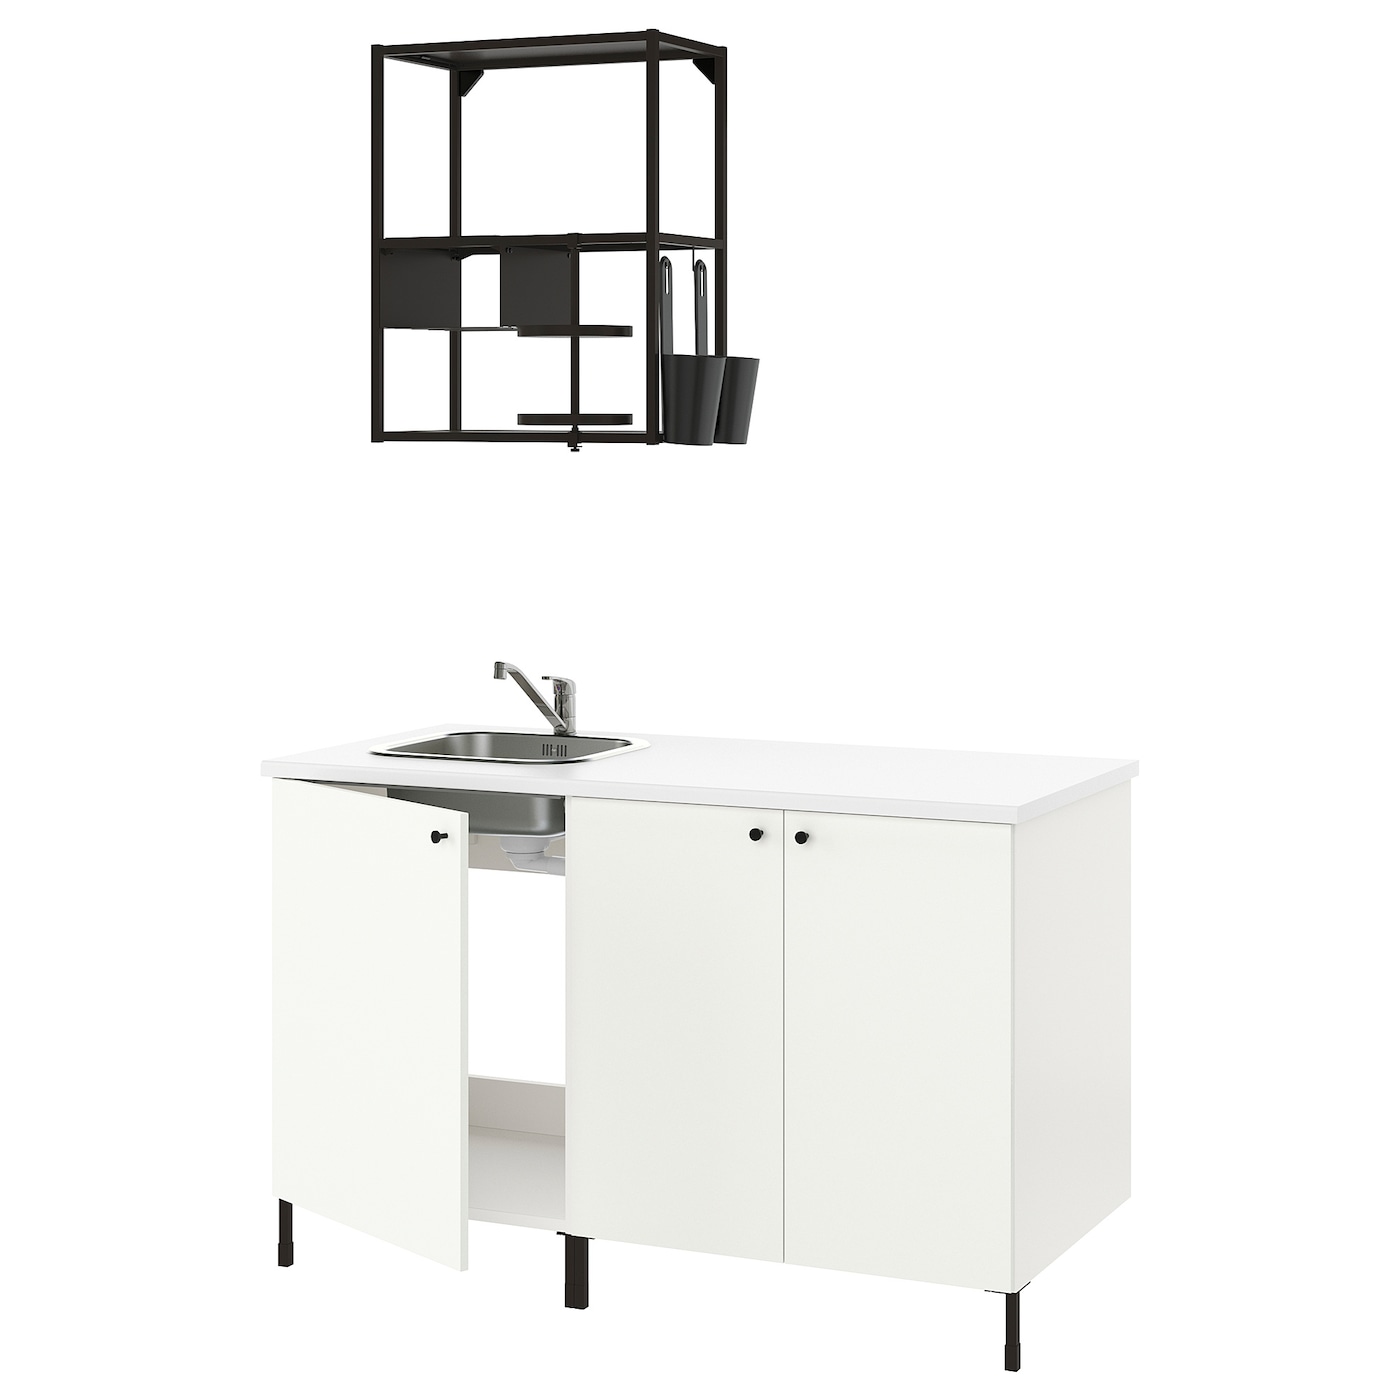 Кухня -  ENHET  IKEA/ ЭНХЕТ ИКЕА, 222х143 см, белый/черный